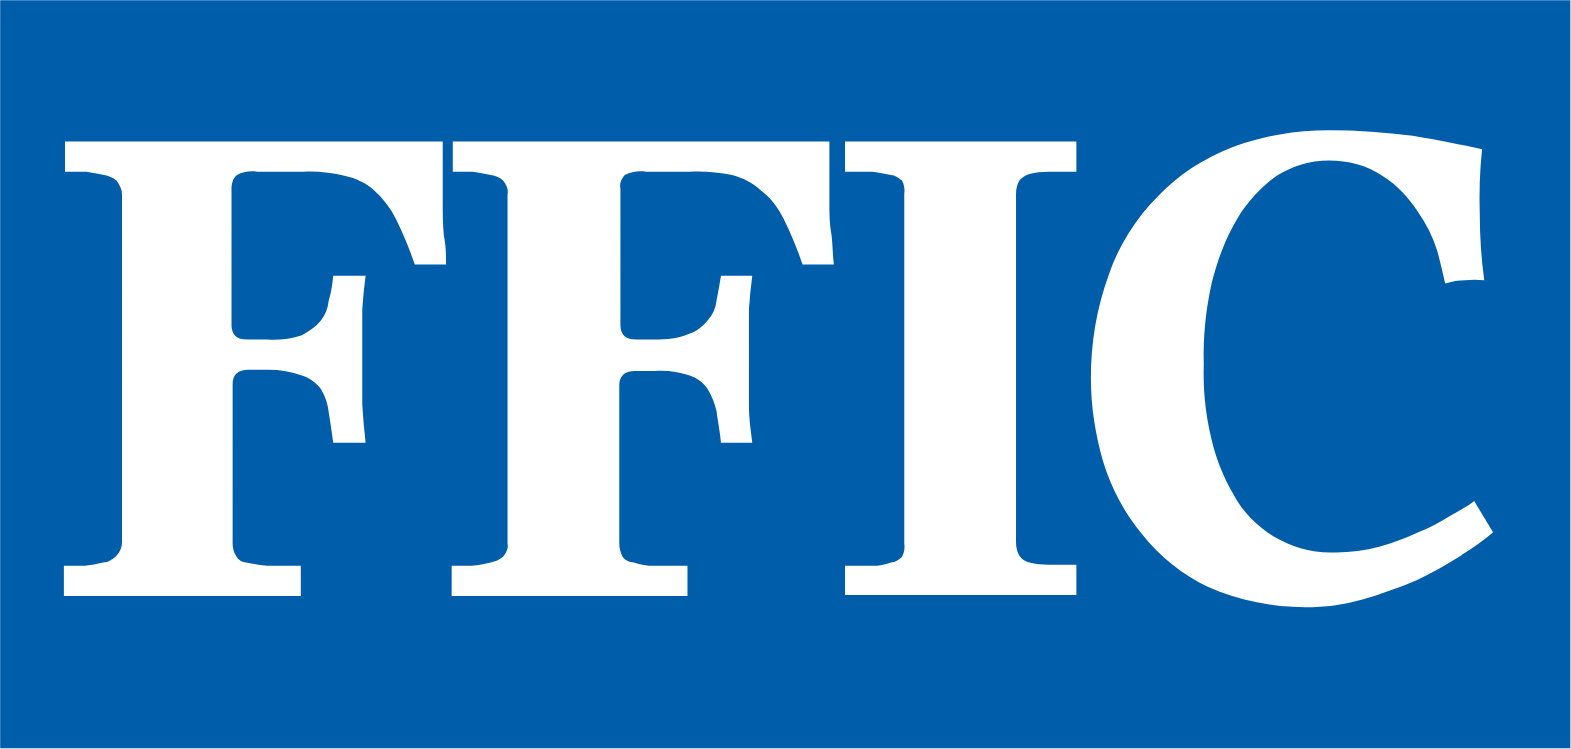 Flushing Financial Corp logo (PNG transparent)